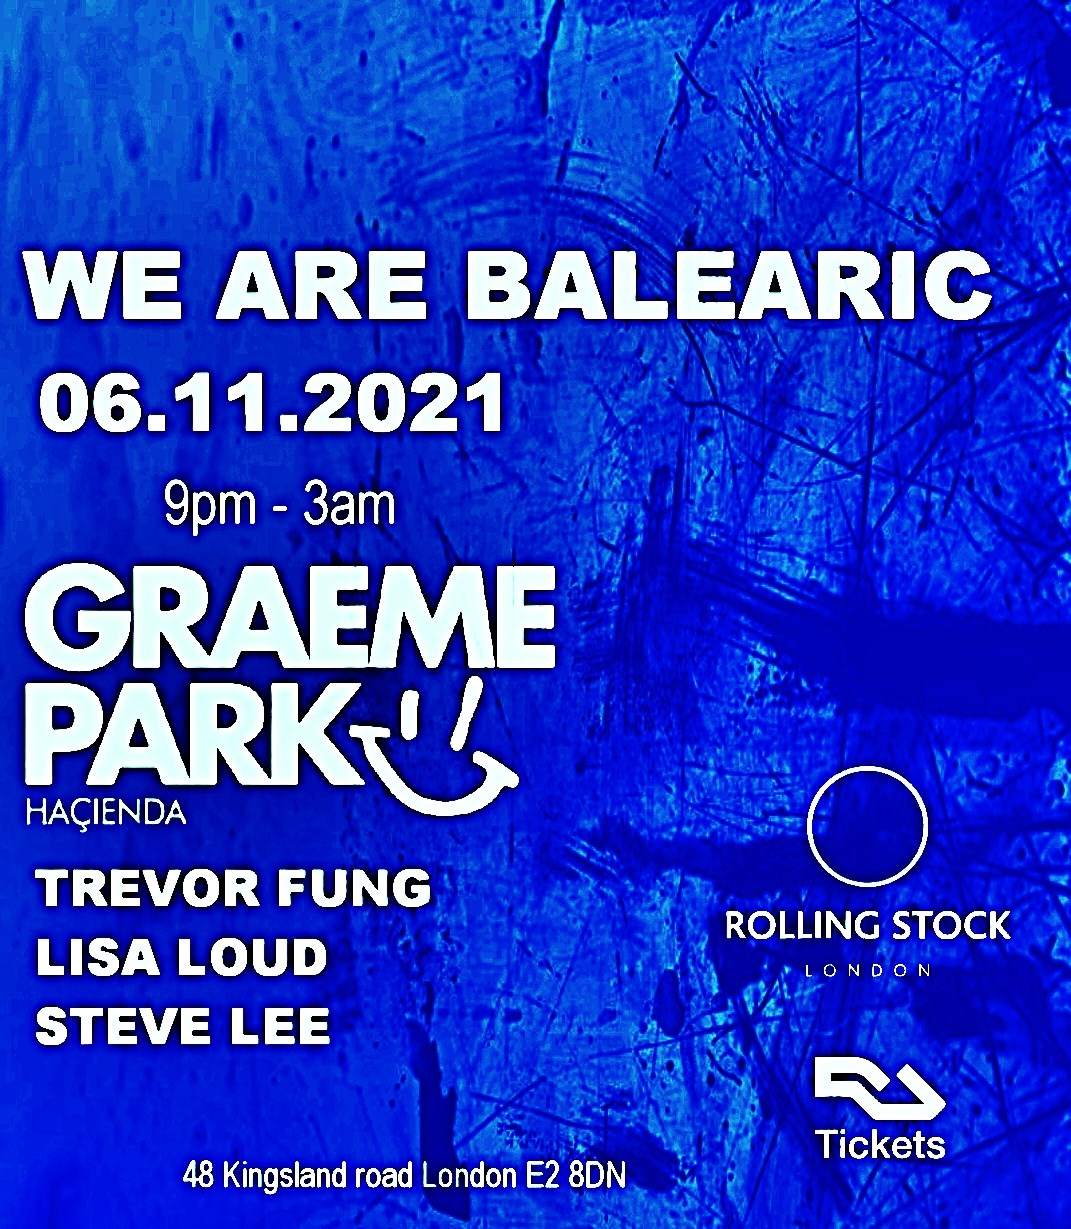 [CANCELED] We Are Balearic presents Graeme Park - フライヤー裏